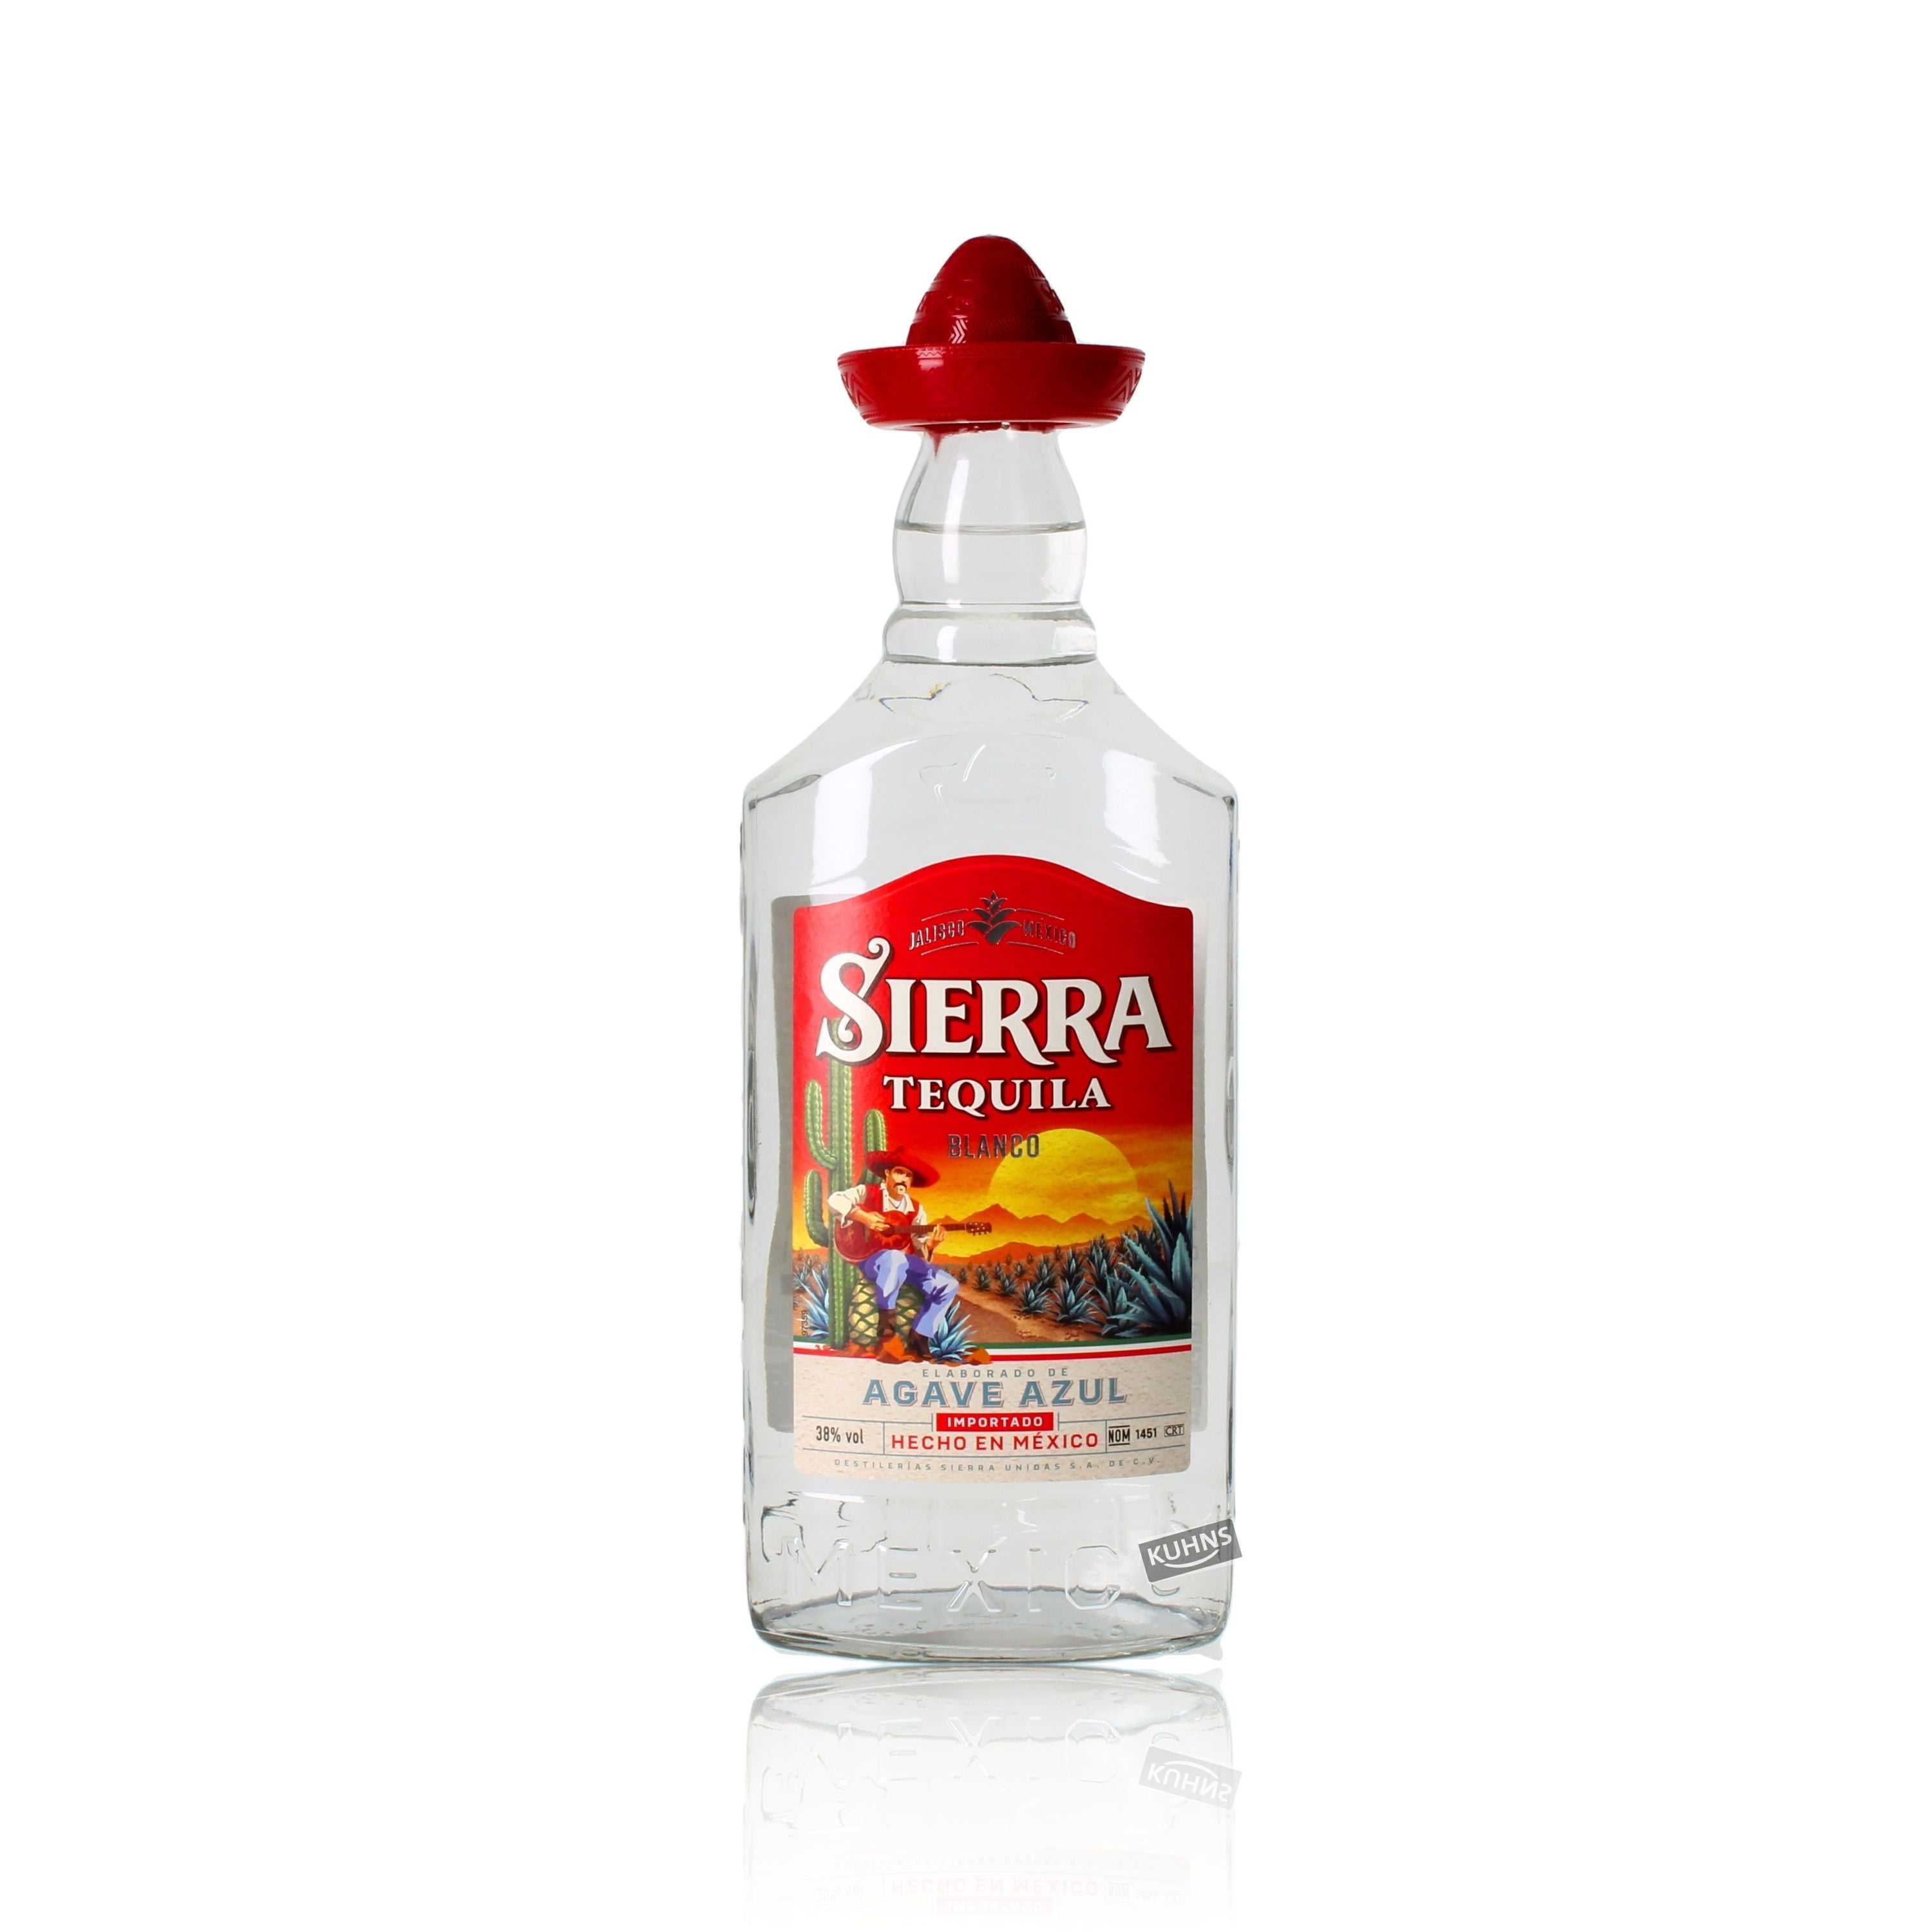 Sierra Blanco 0,7l, alc. 38 Vol.-%, Tequila Mexico